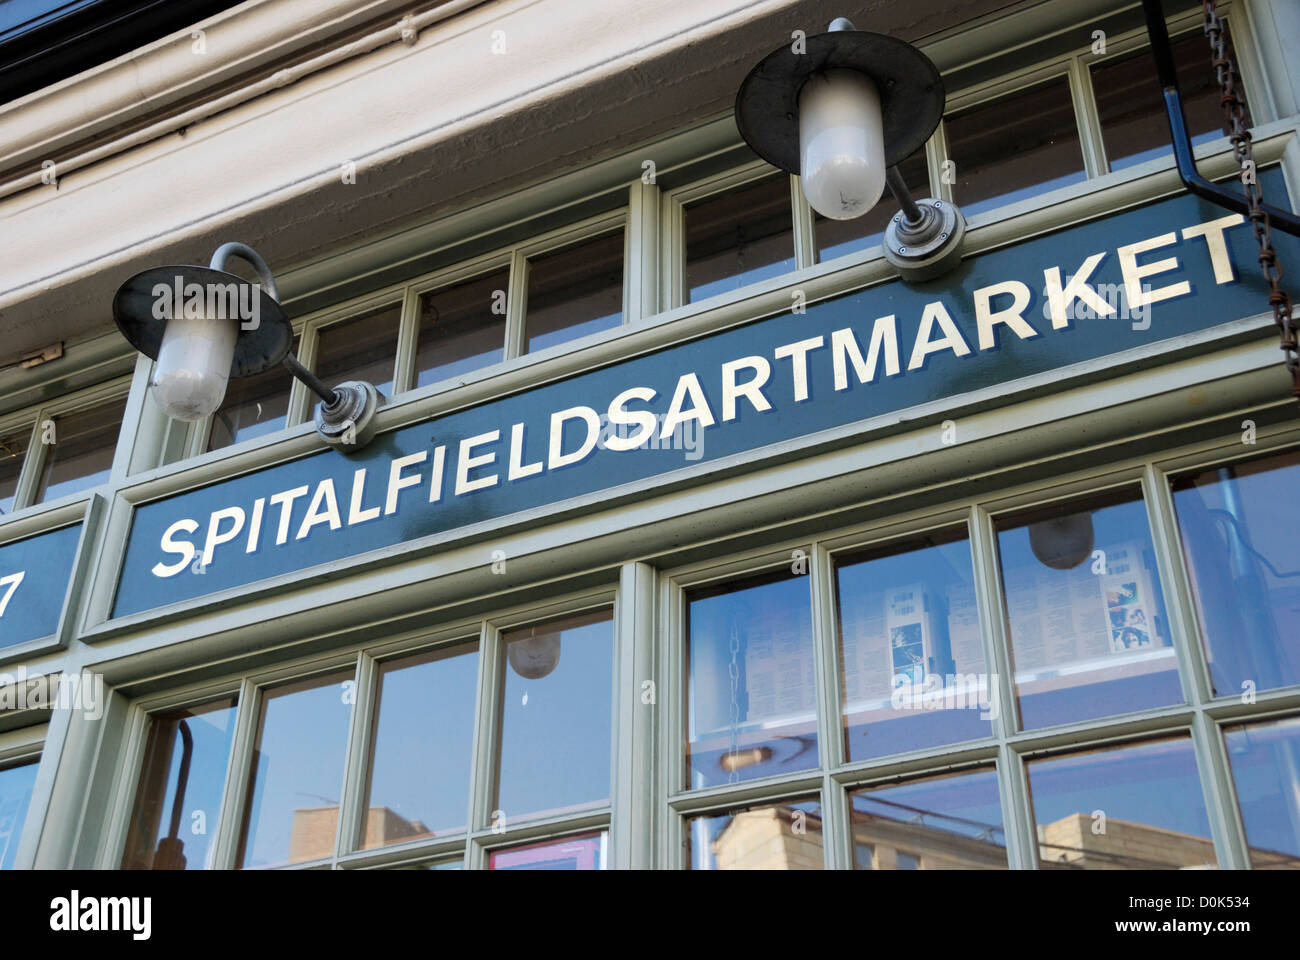 Spitalfields Art Market sign. Stock Photo